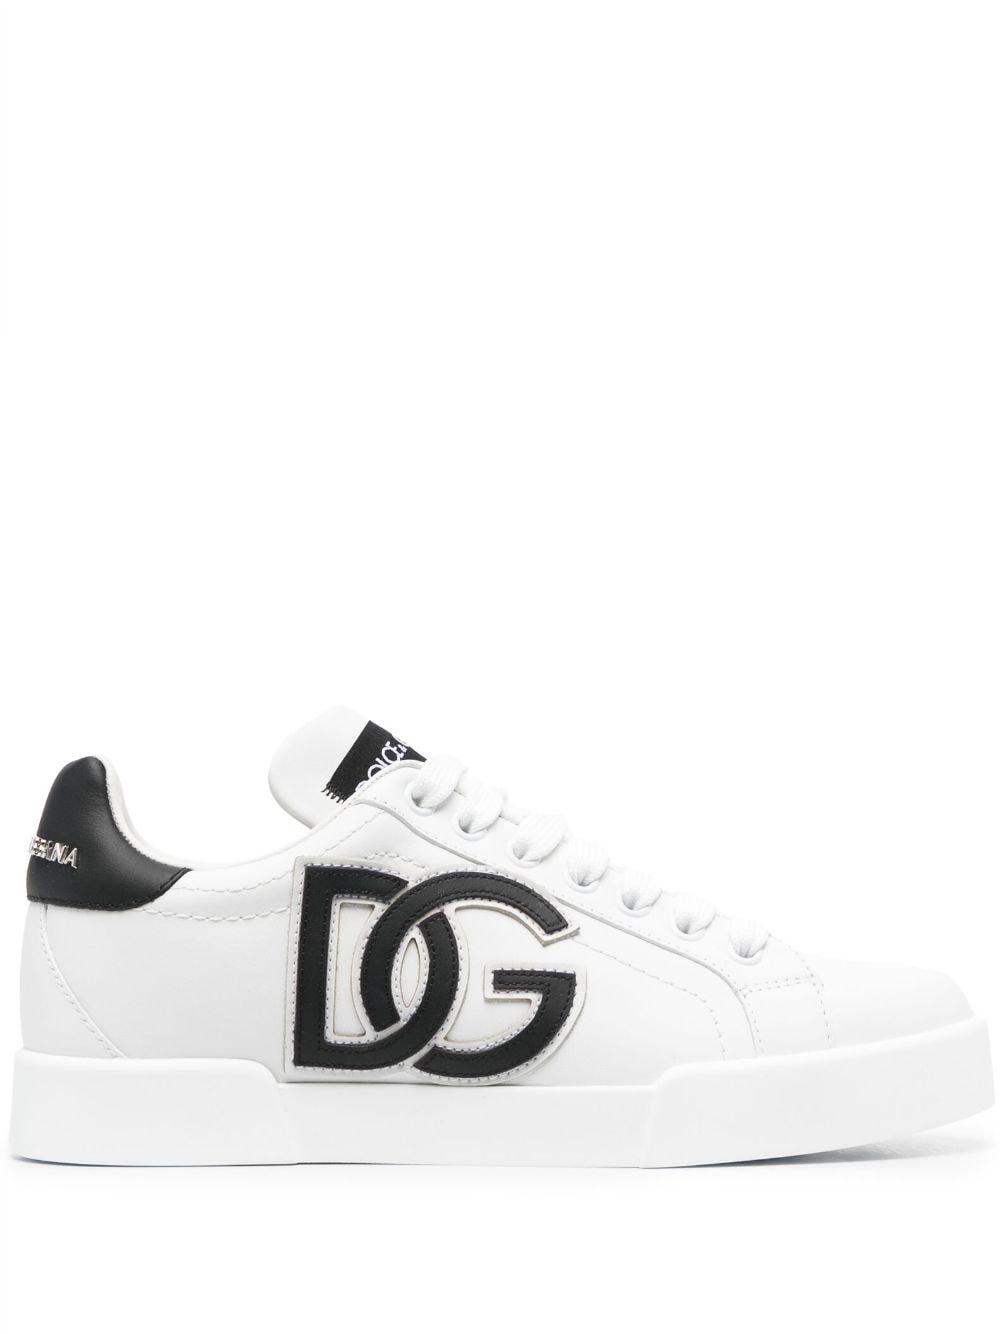 Dolce & Portofino Dg Logo Leather Sneaker White | Lyst